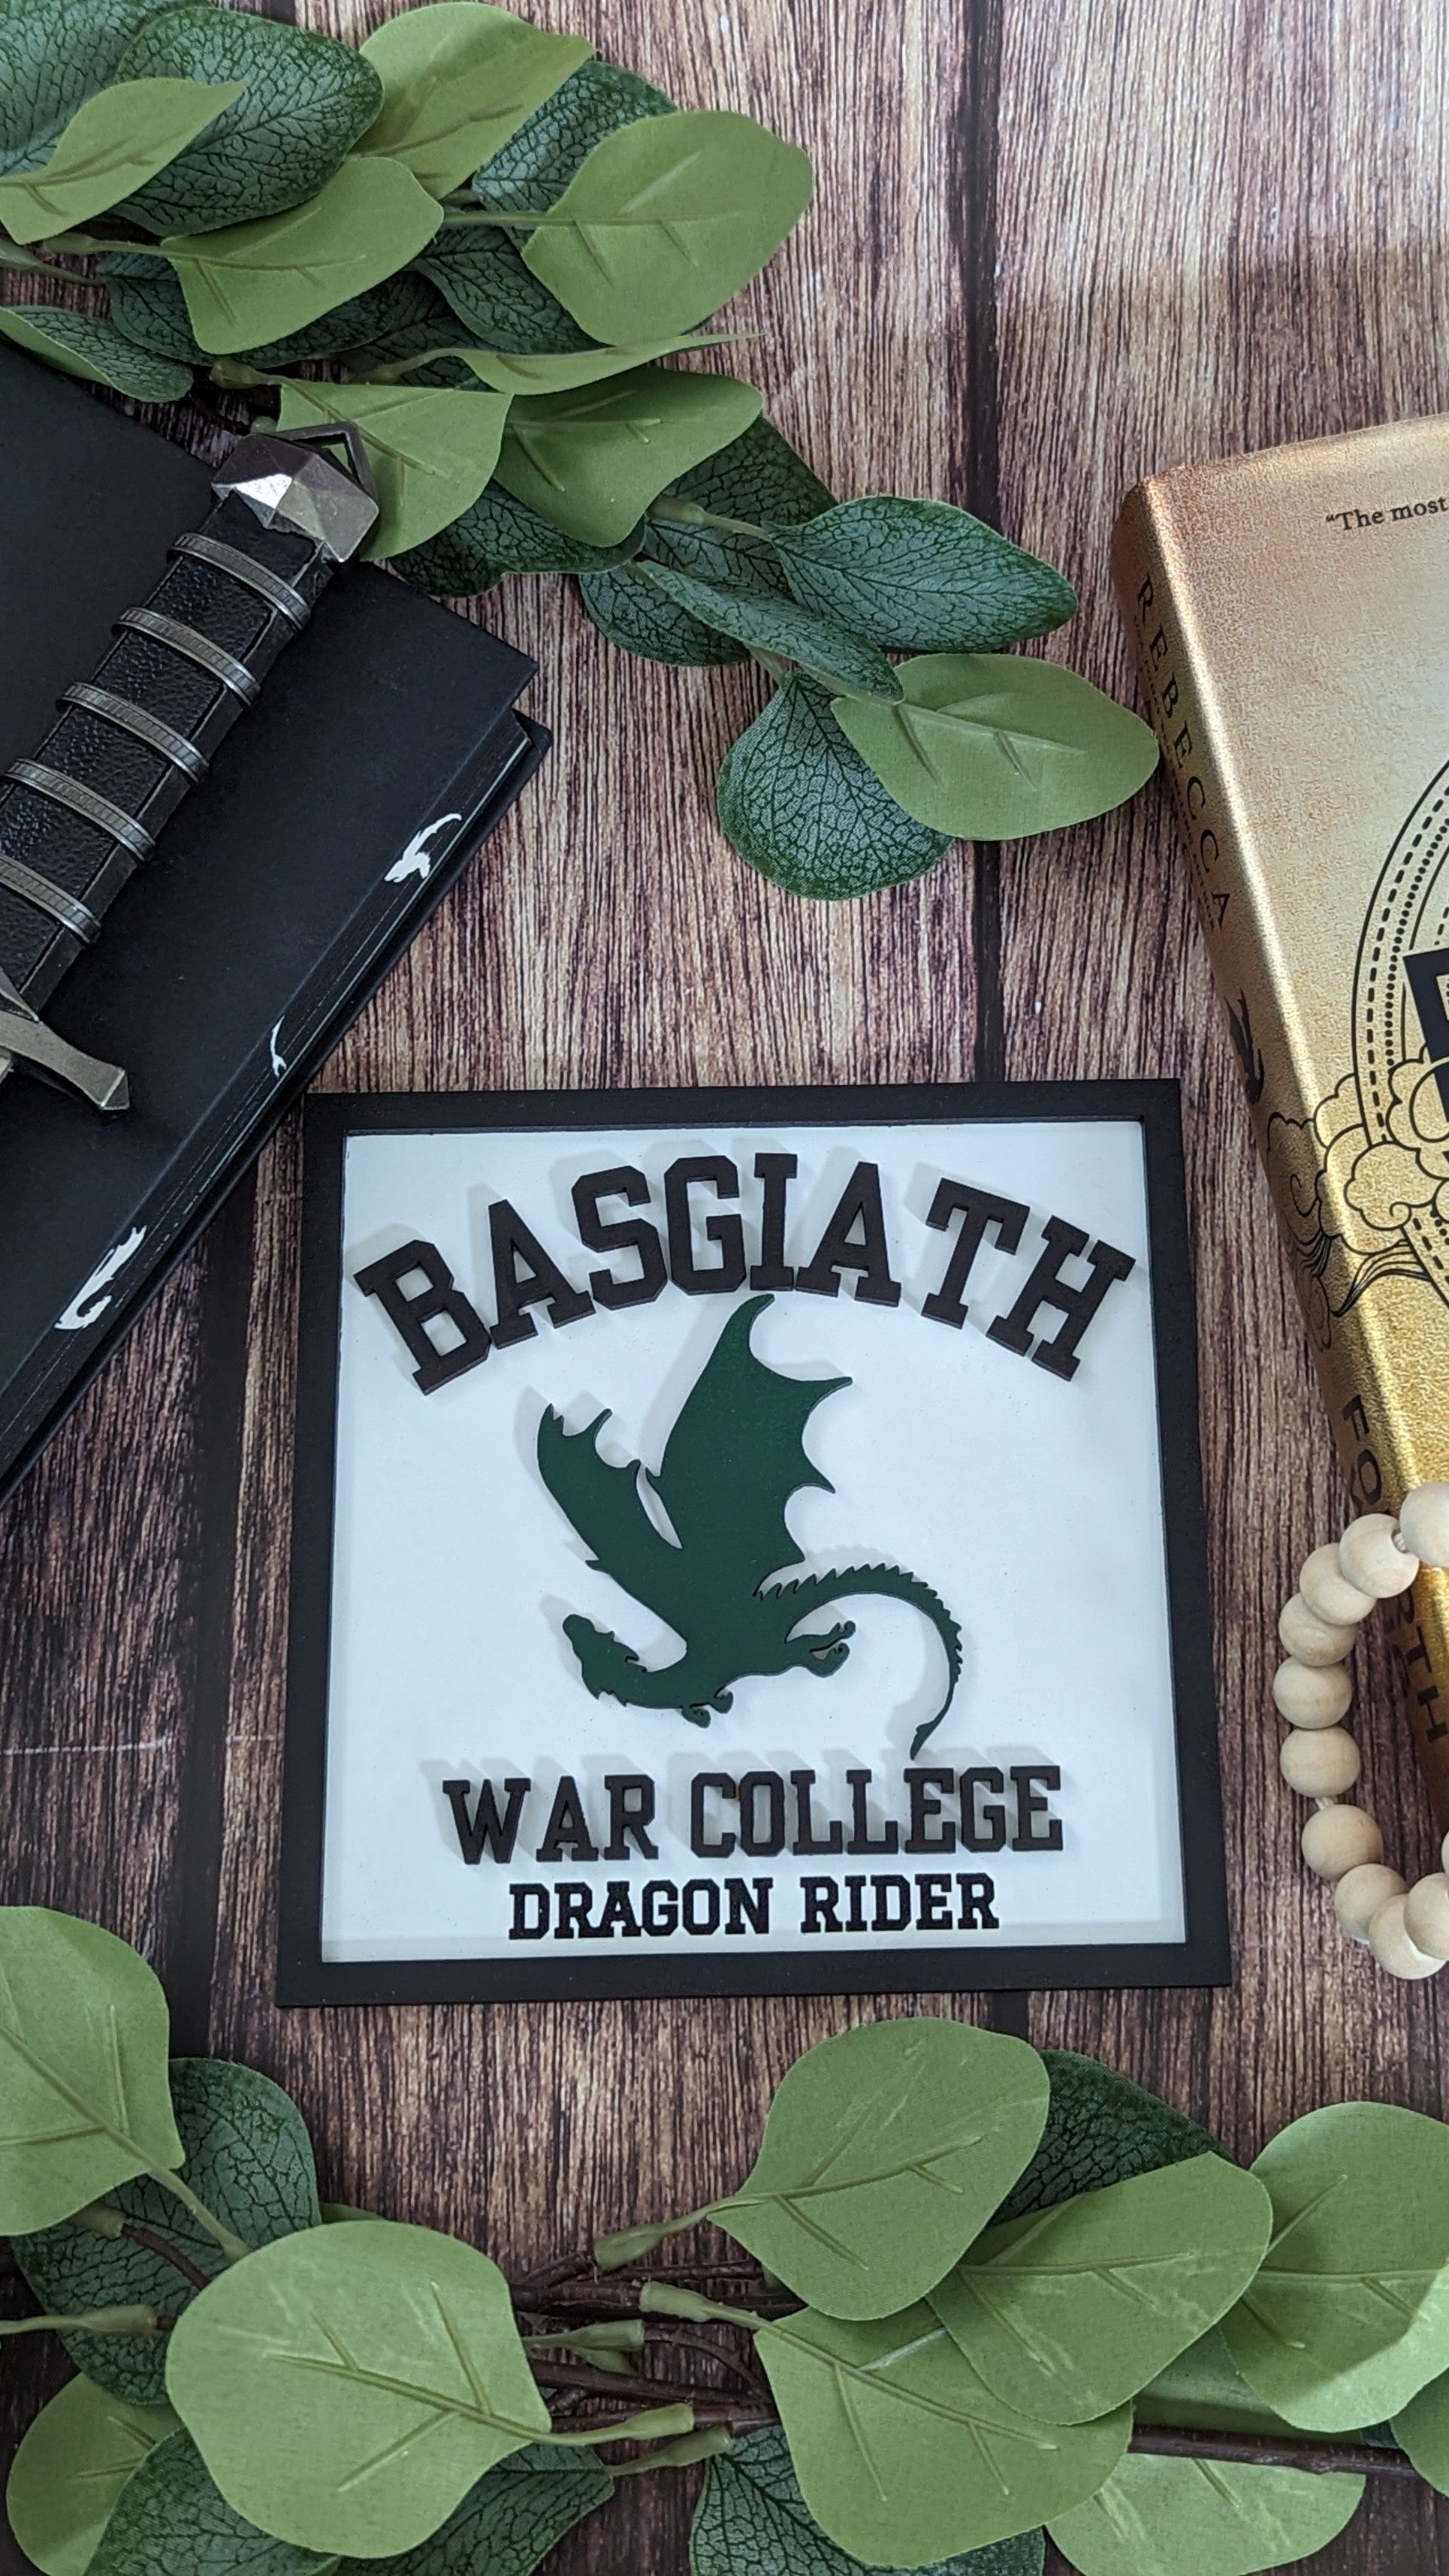 Basgiath War College Choose your Dragon | Licensed Fourth Wing Bookshelf Sign - Quill & Cauldron